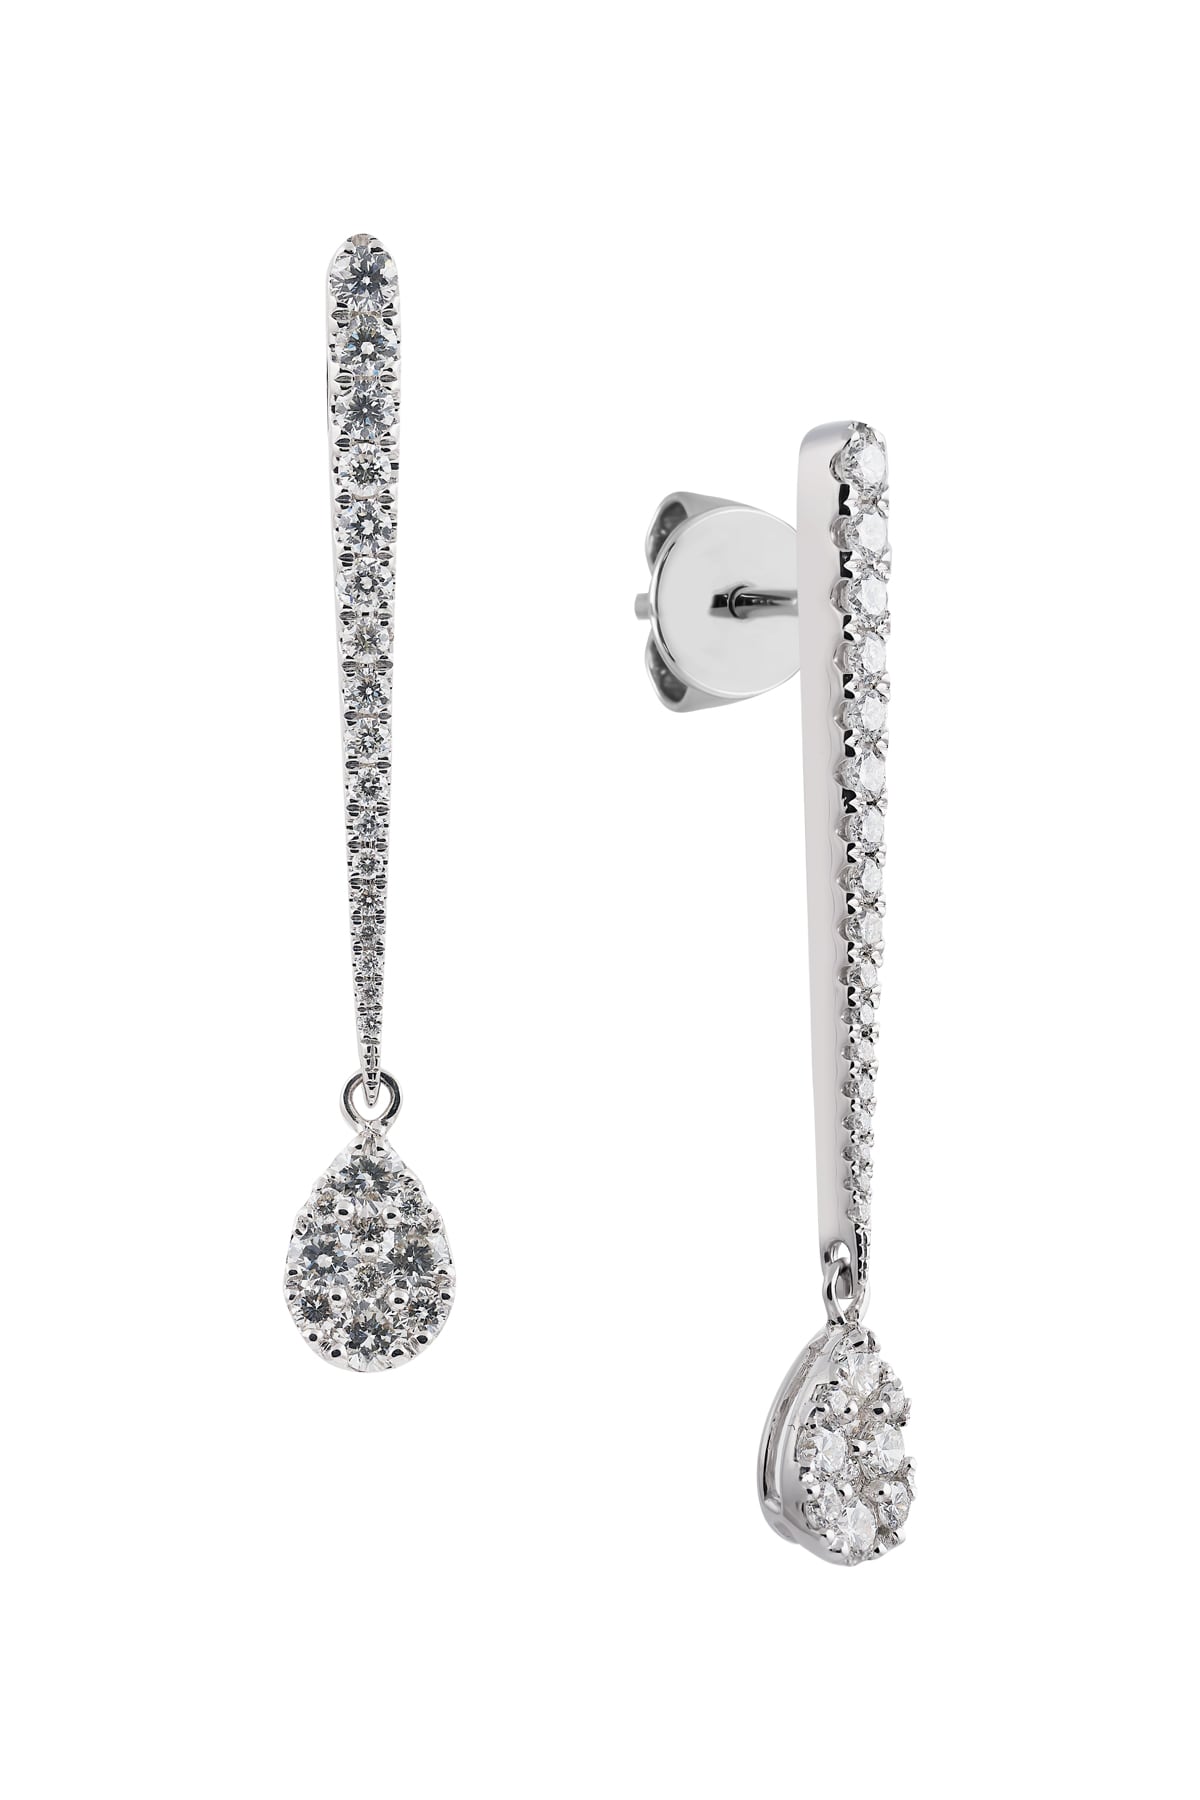 Pear Shaped Long Diamond Drop Earrings from LeGassick Jewellery.